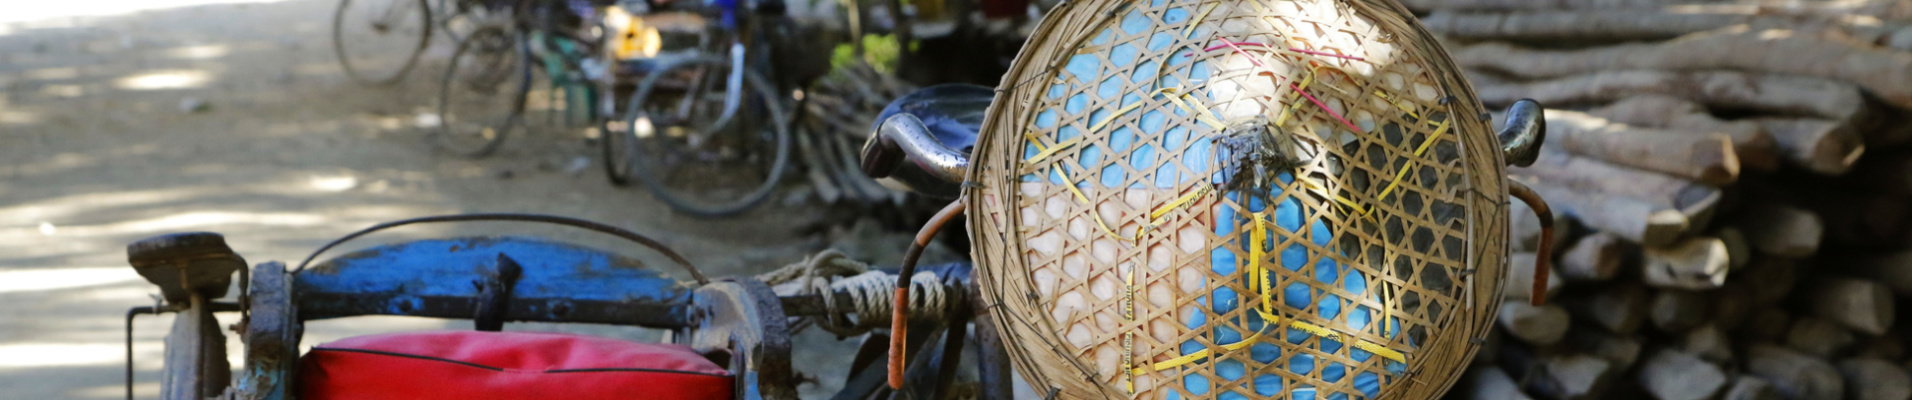 Tricycle, Myanmar